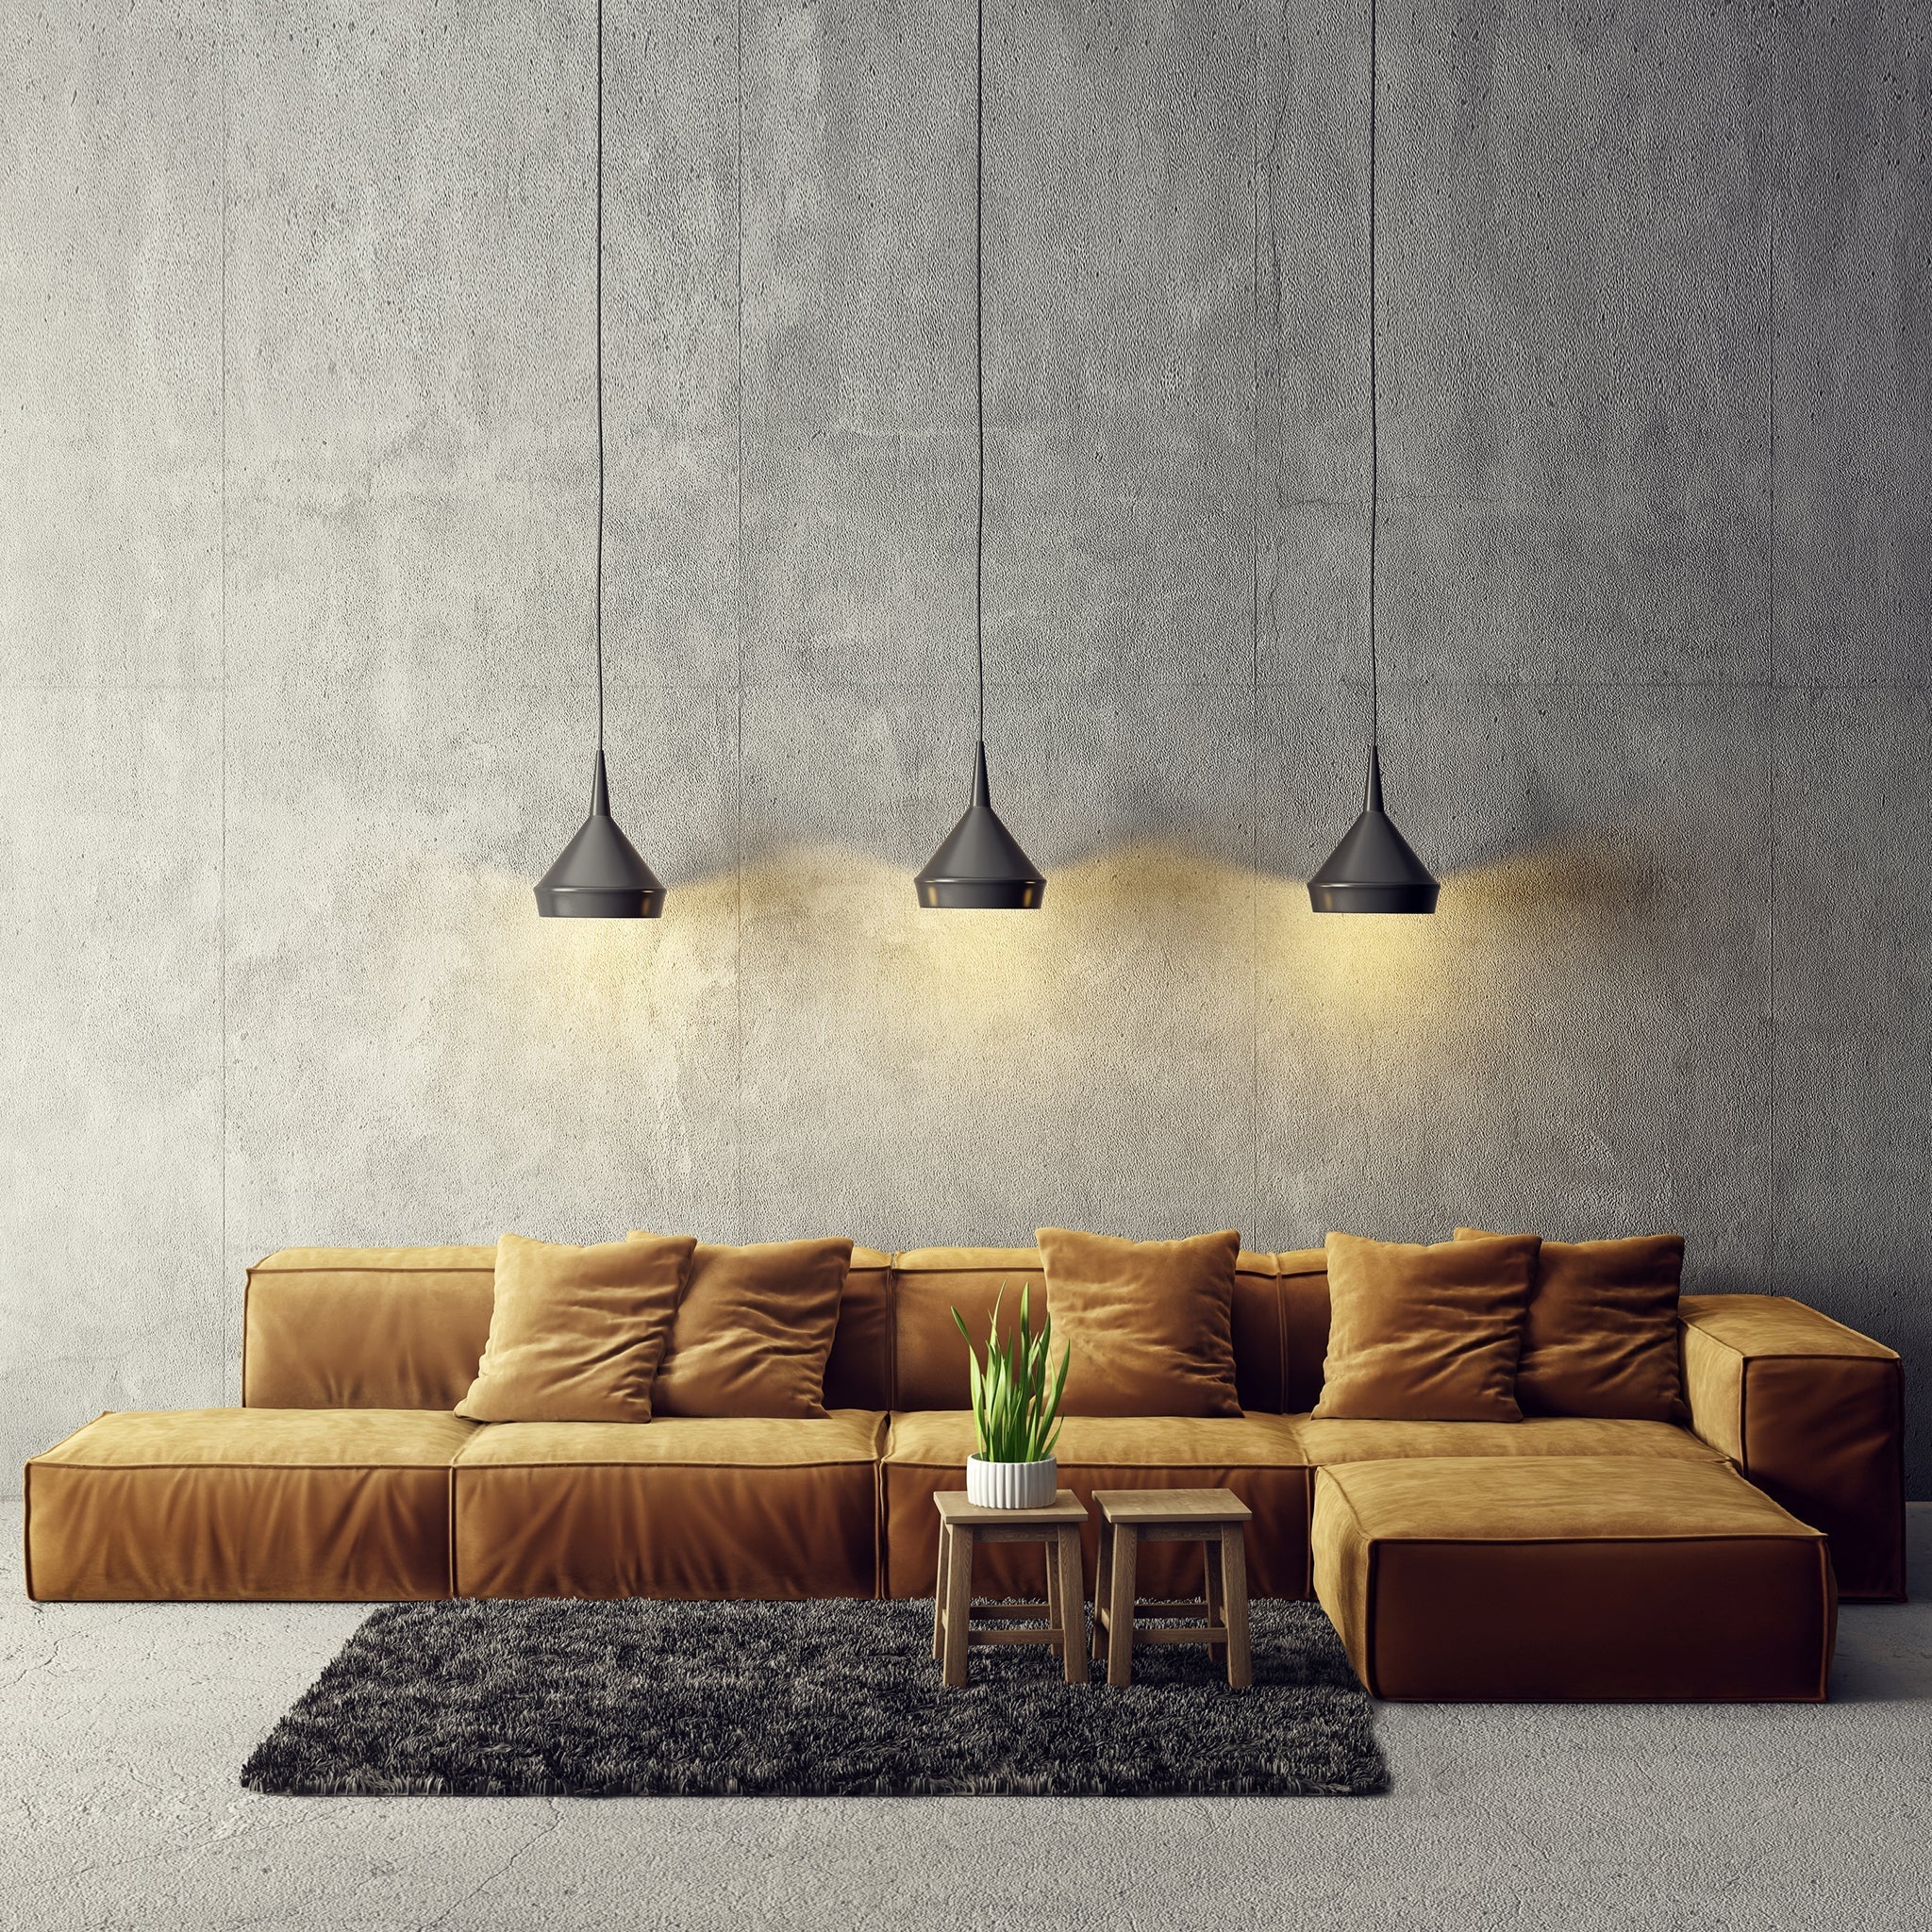 Grey Shag Rug - Berre Furniture